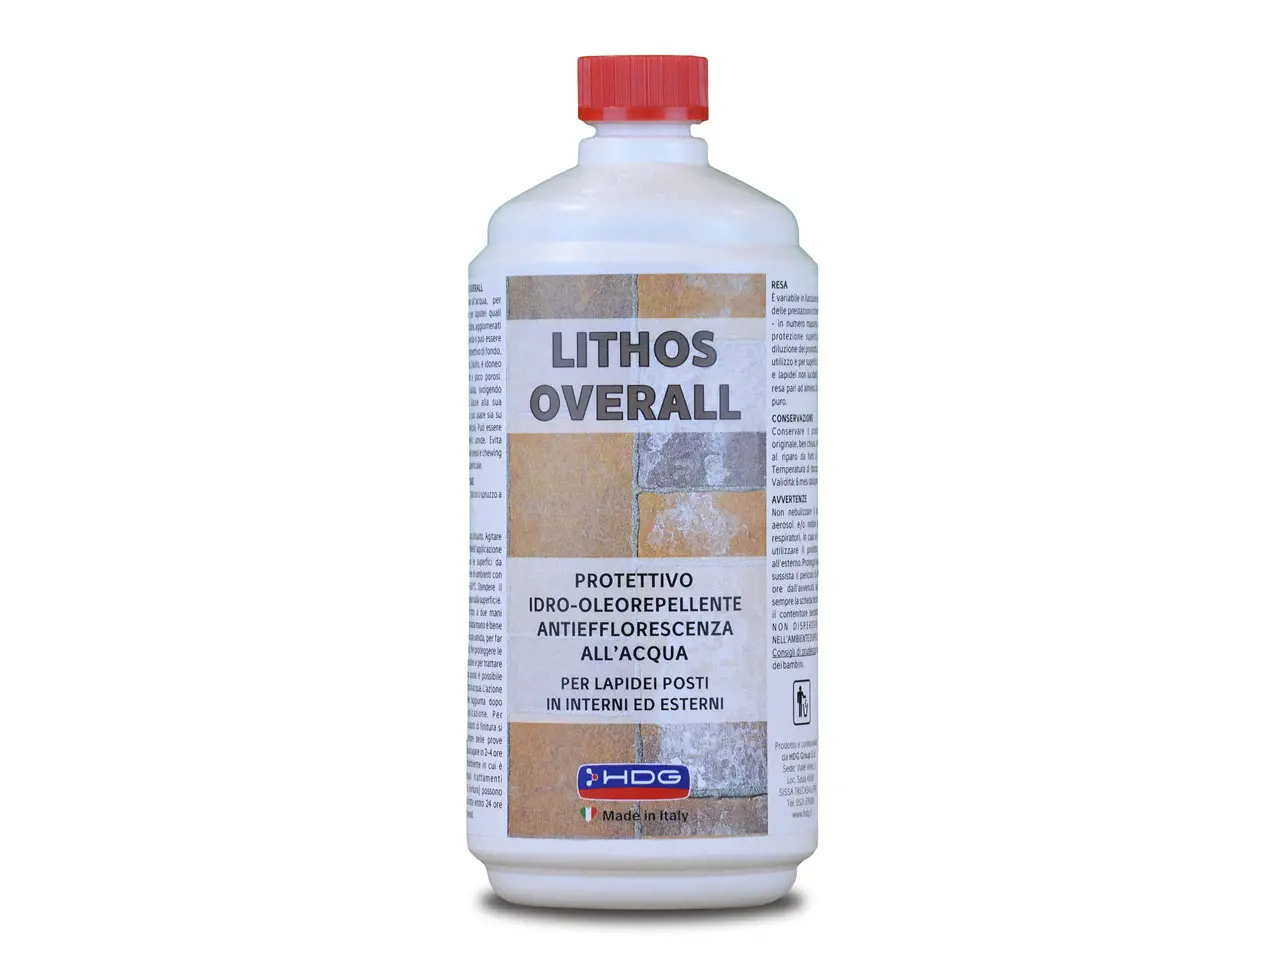 Lithos-overall-1-litro.jpg